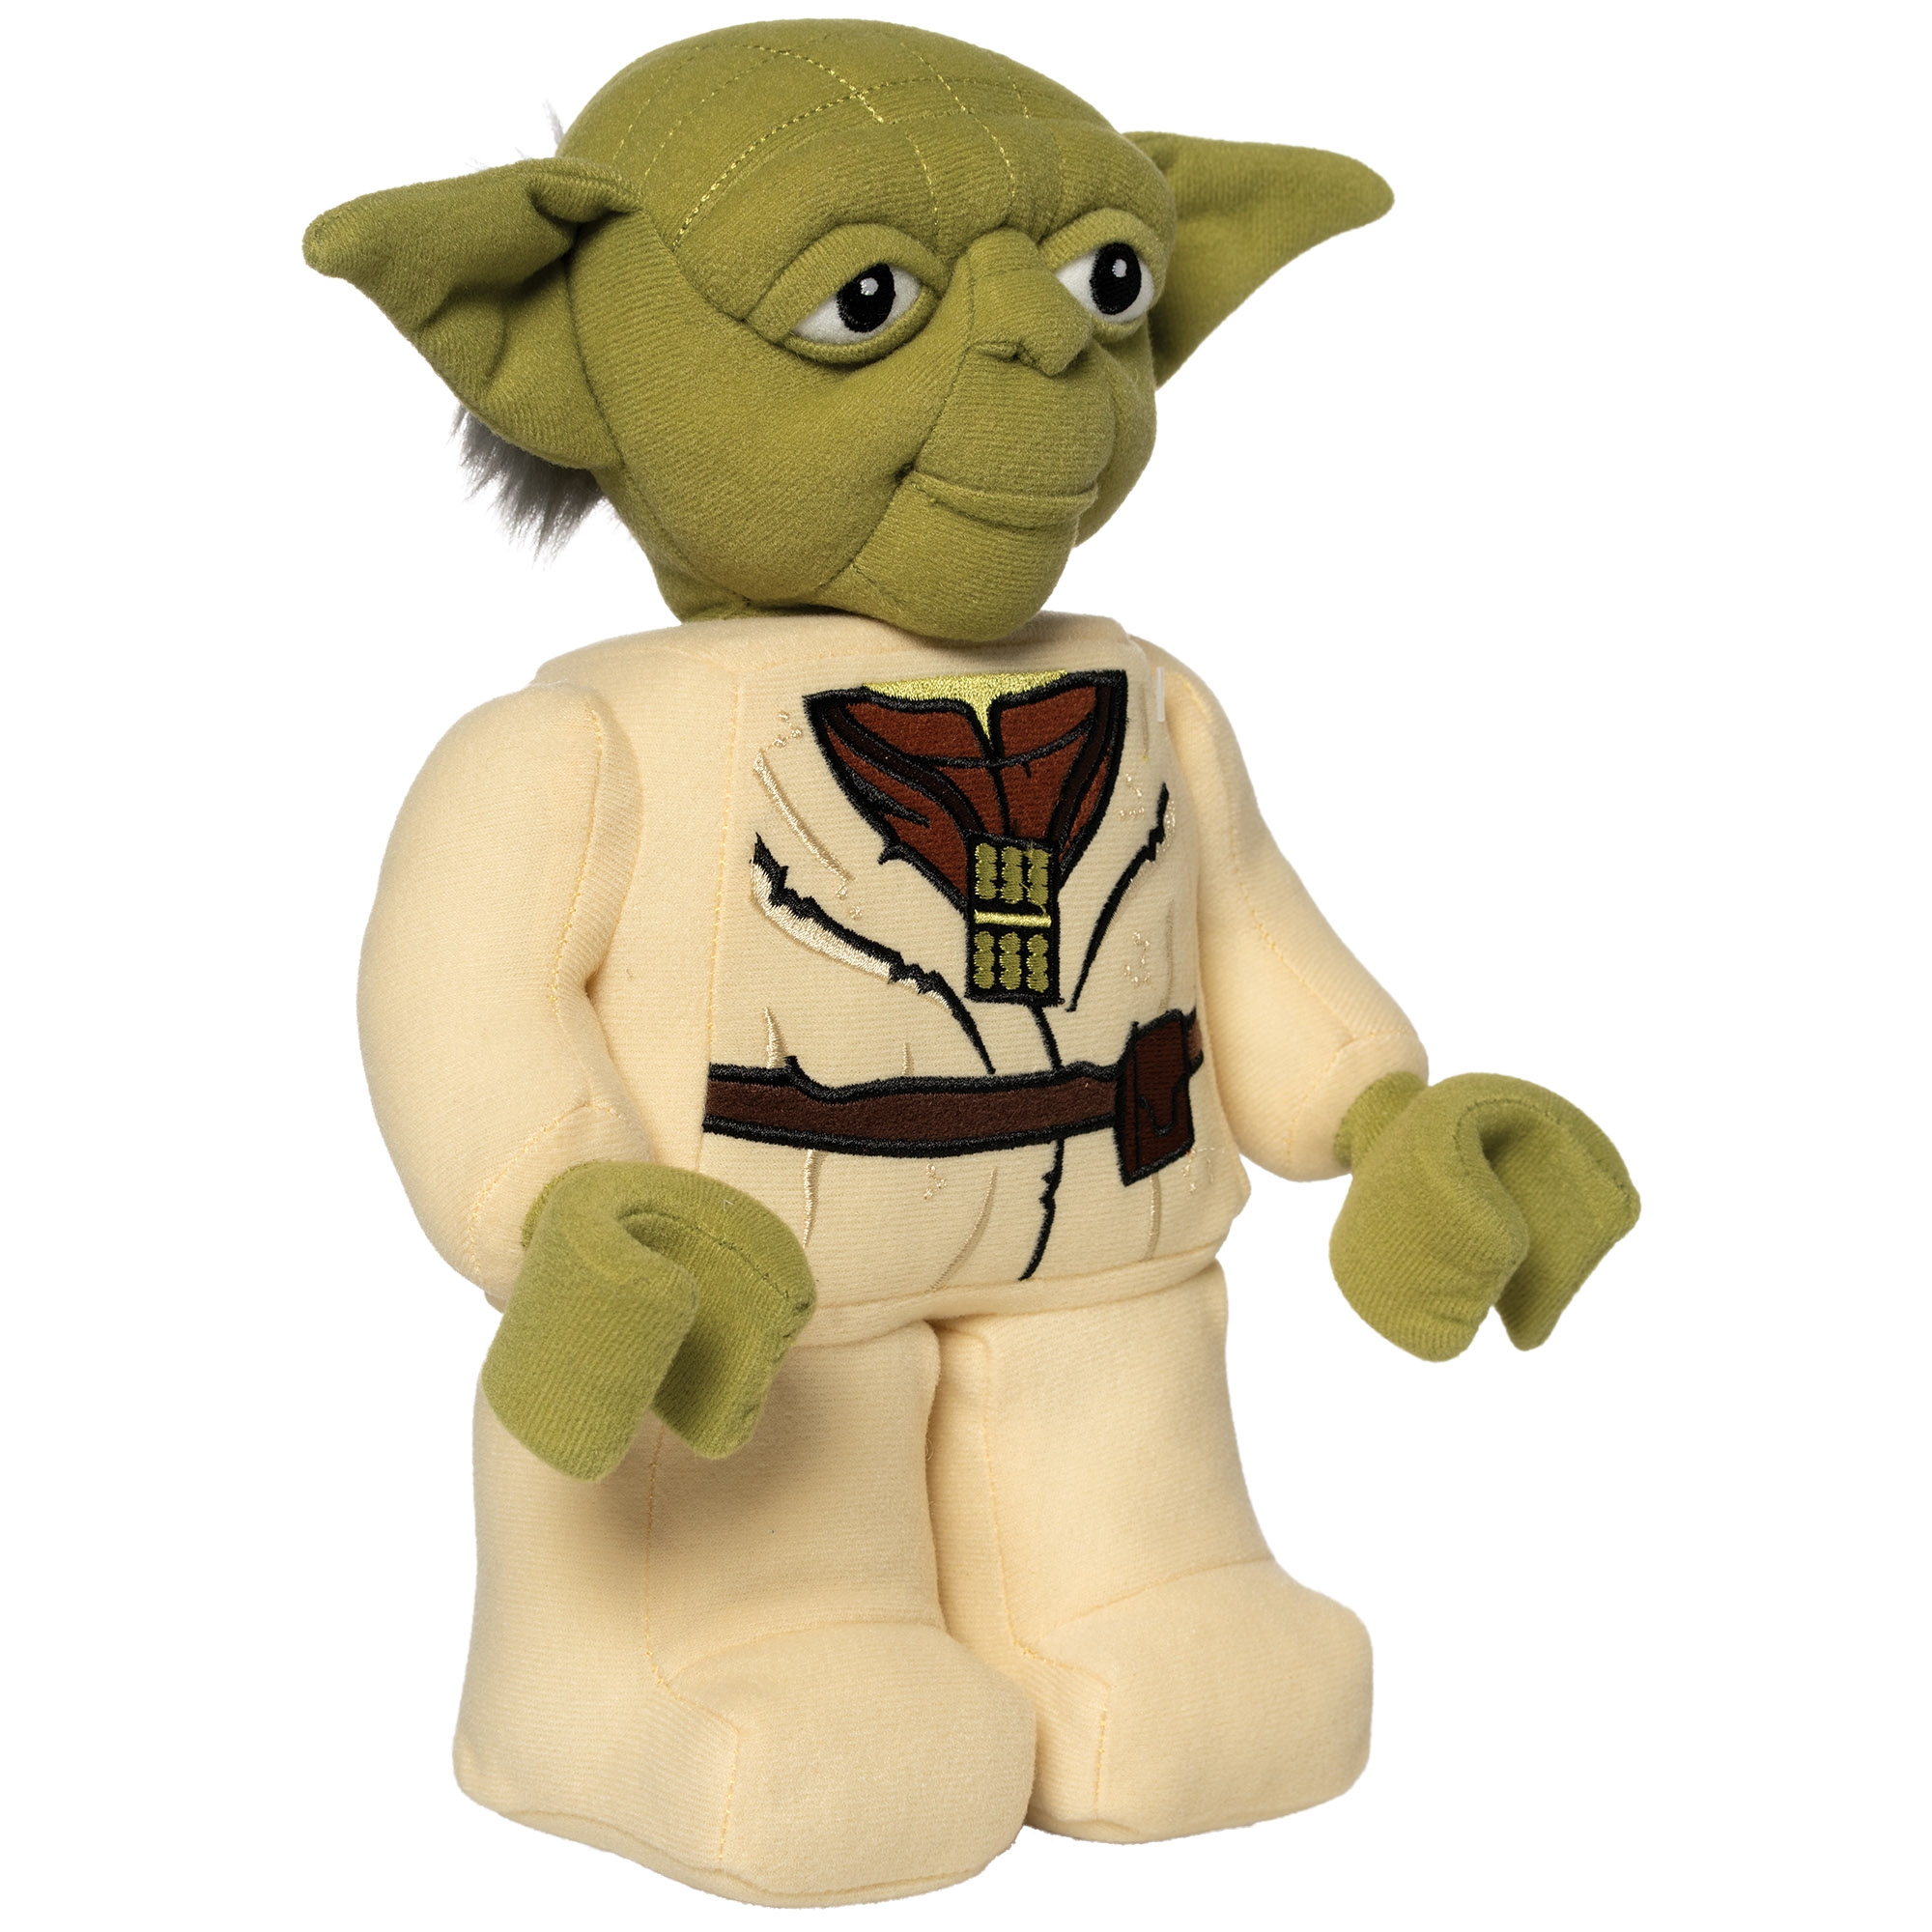 LEGO Star Wars Yoda Holiday Plush Character, One Size - Ralphs